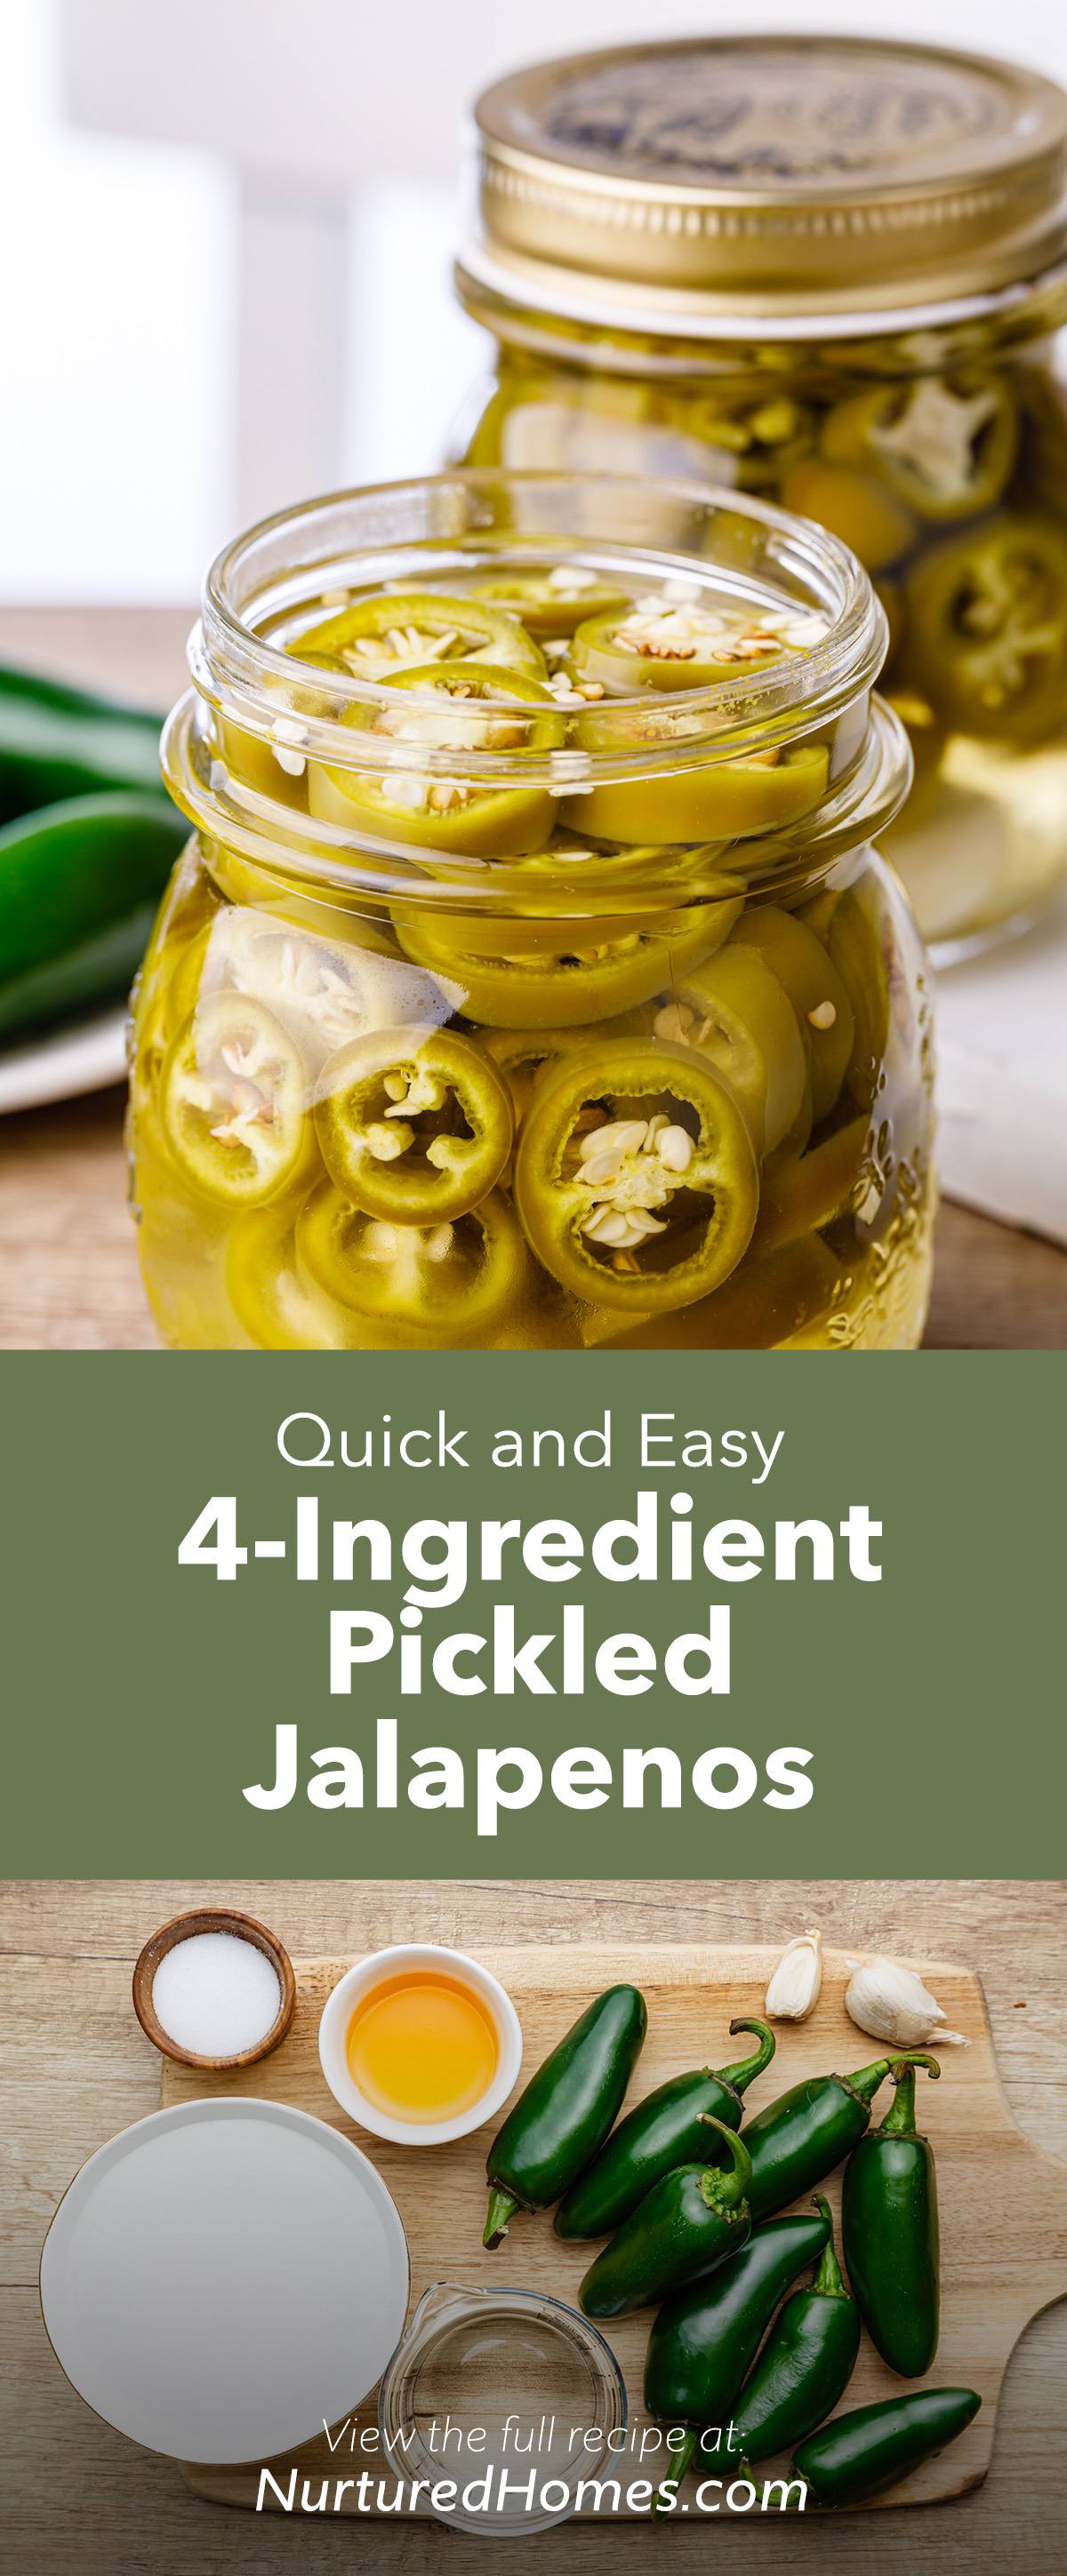 Quick 4-Ingredient Pickled Jalapenos